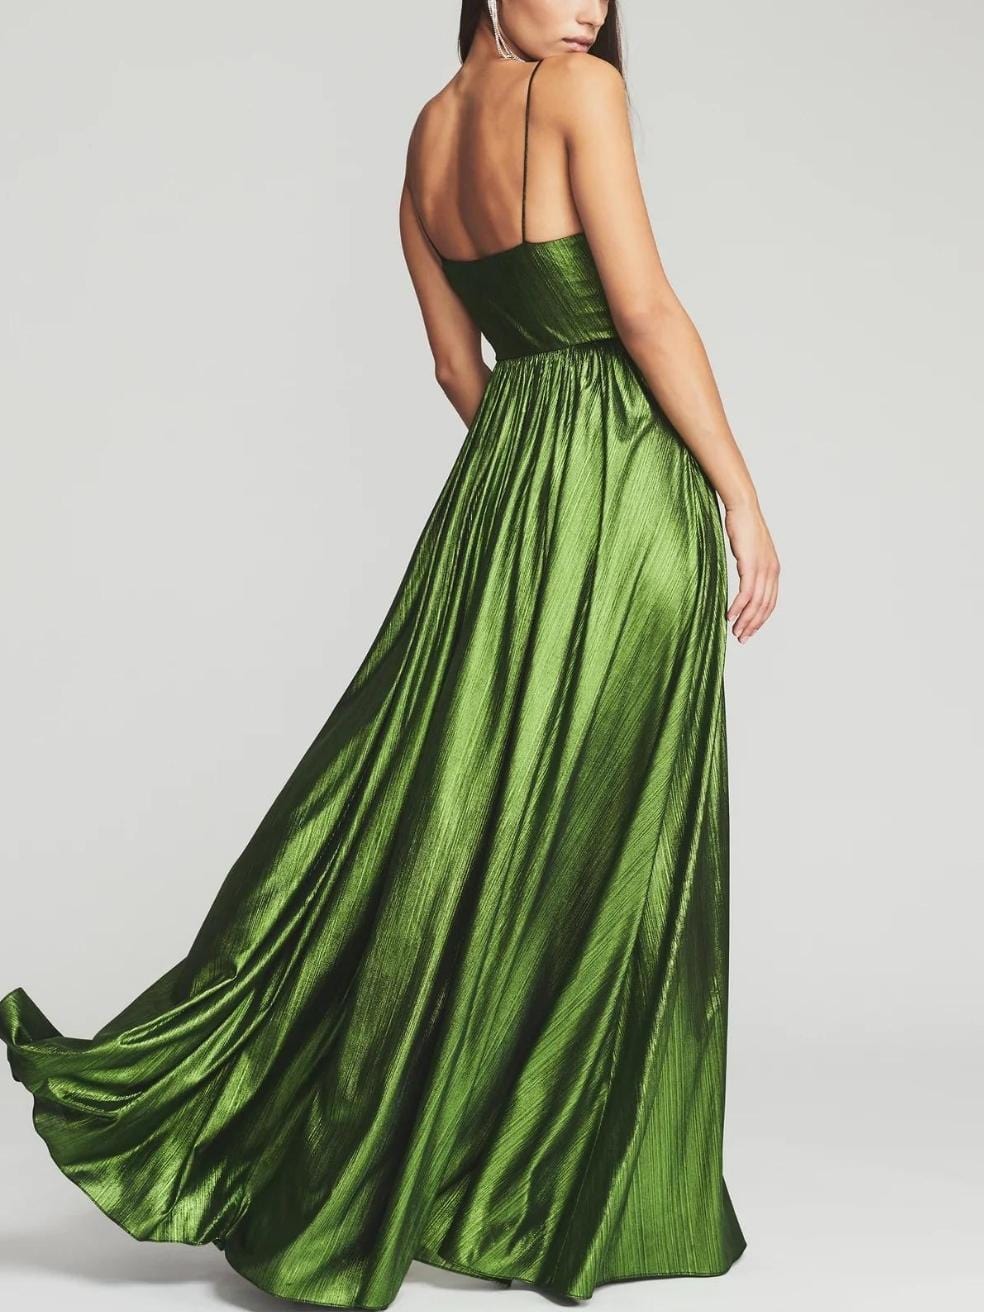 Doss Dress in green